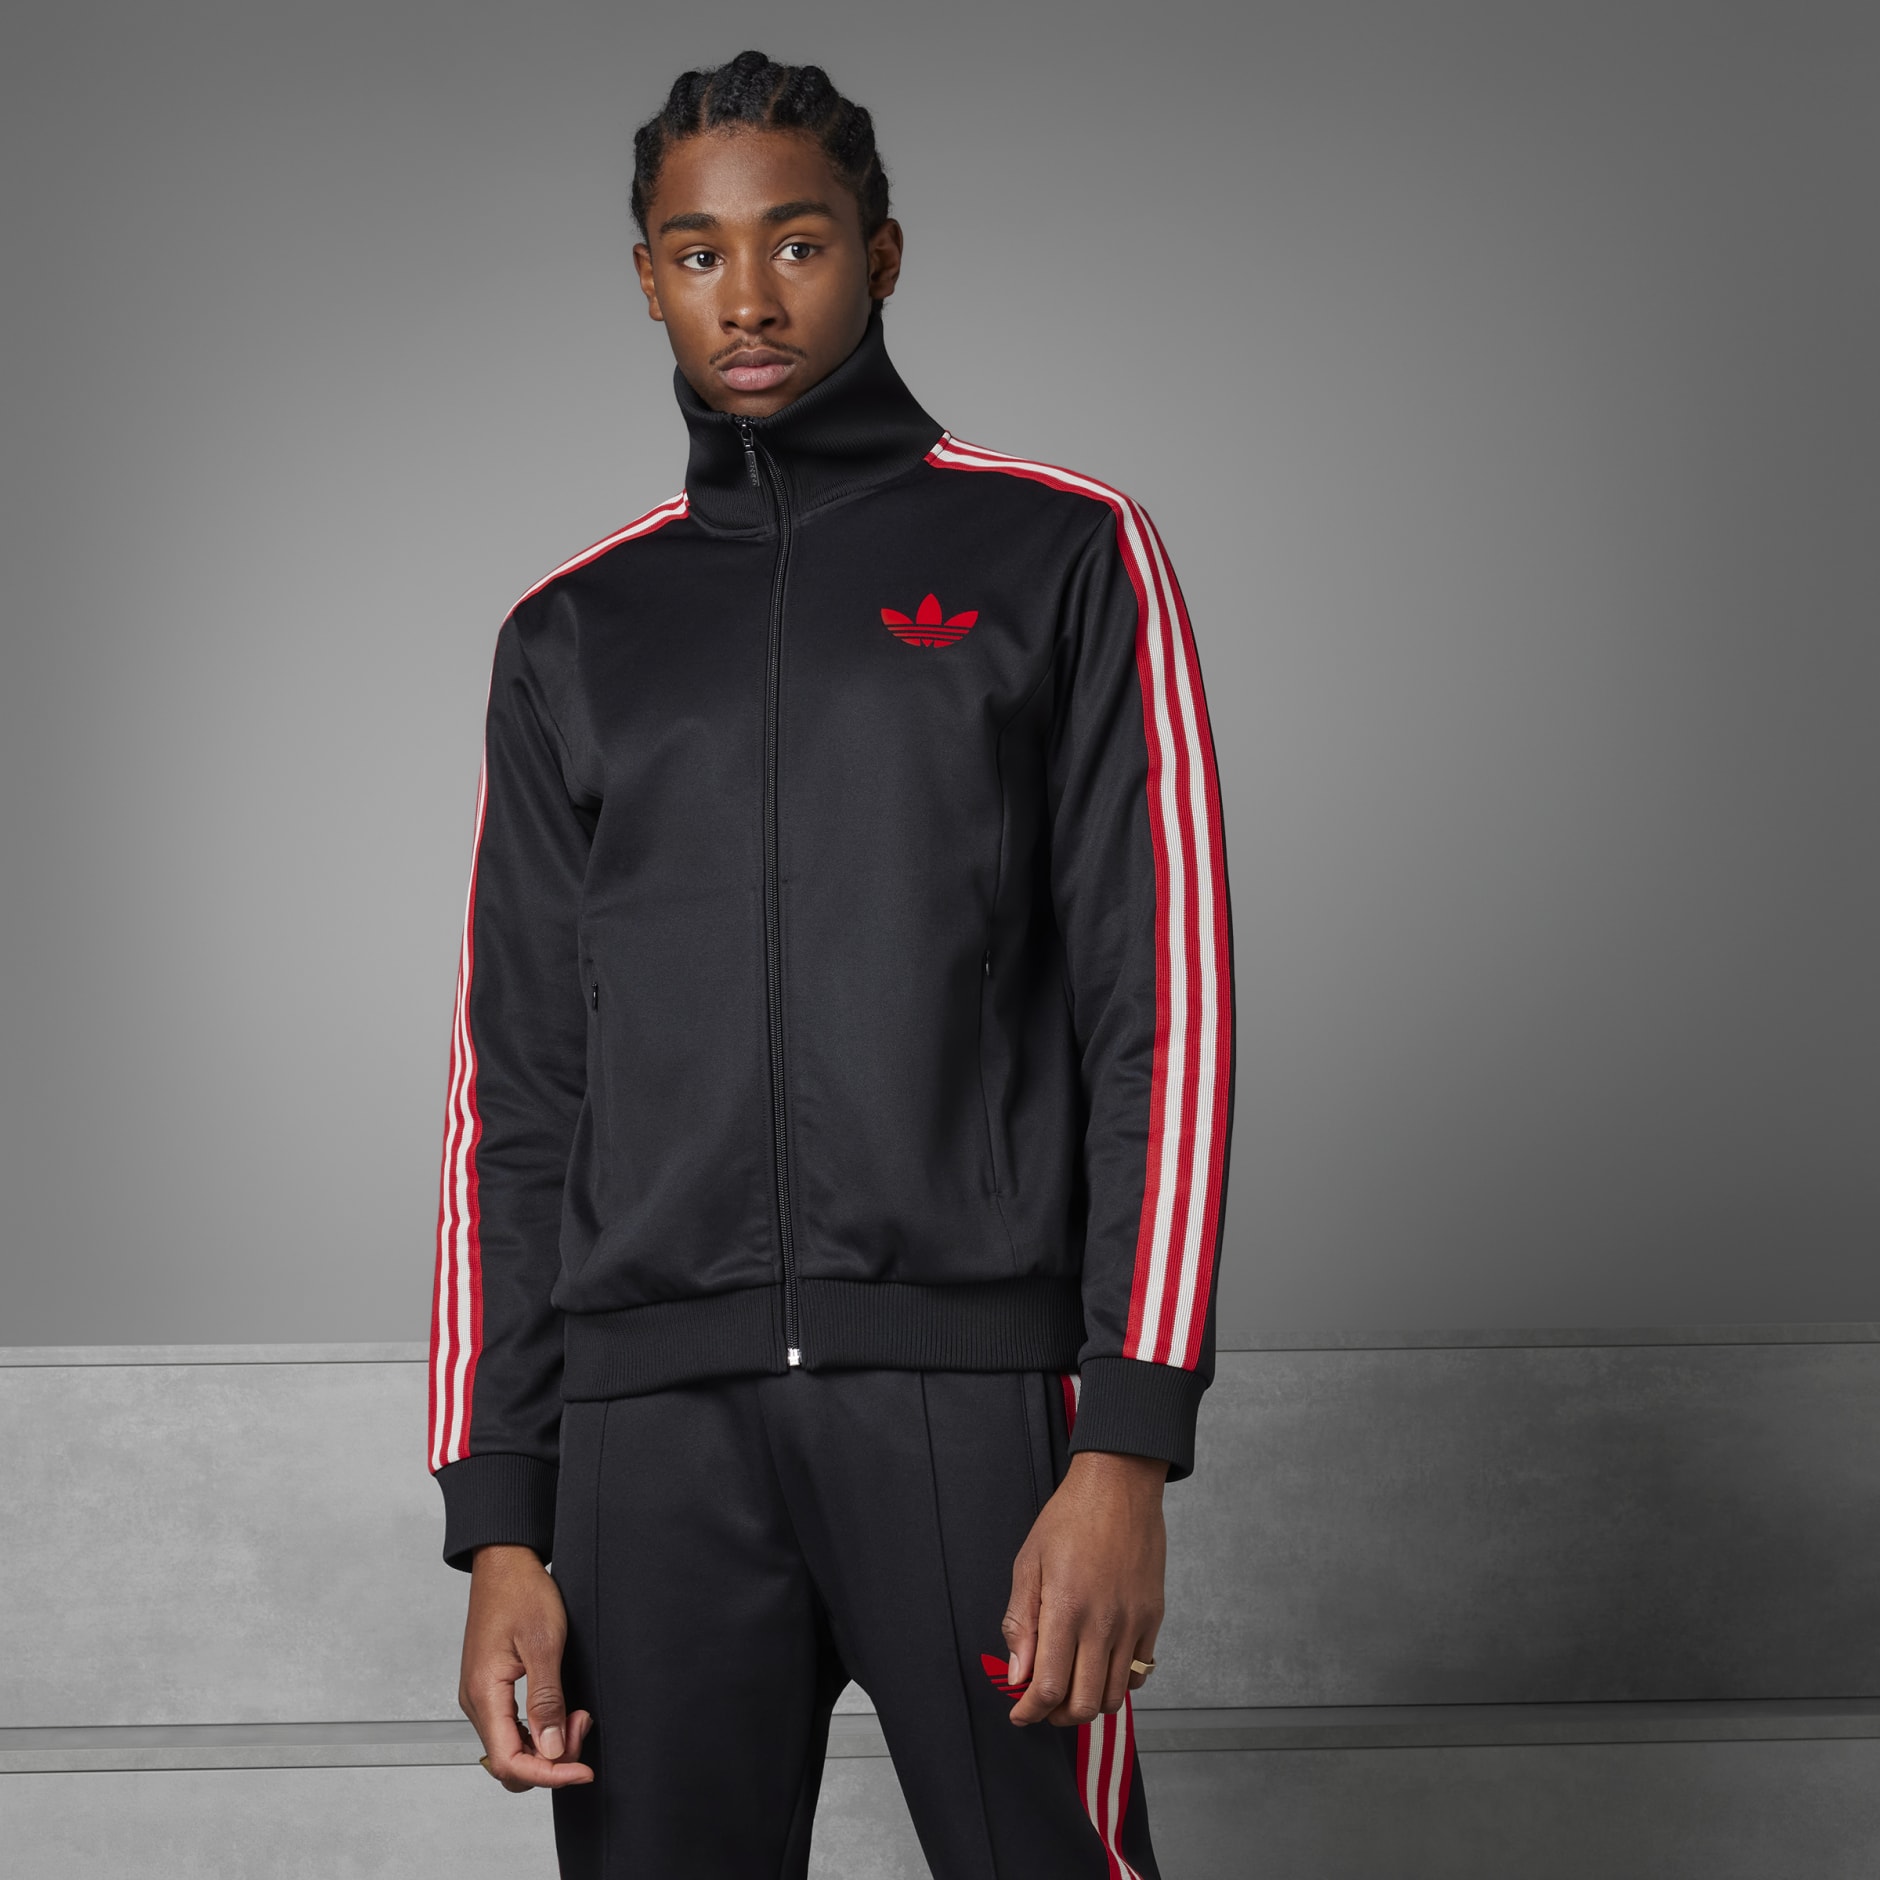 Clan Samenstelling schudden Men's Clothing - Ajax Amsterdam OG Track Jacket - Black | adidas Oman